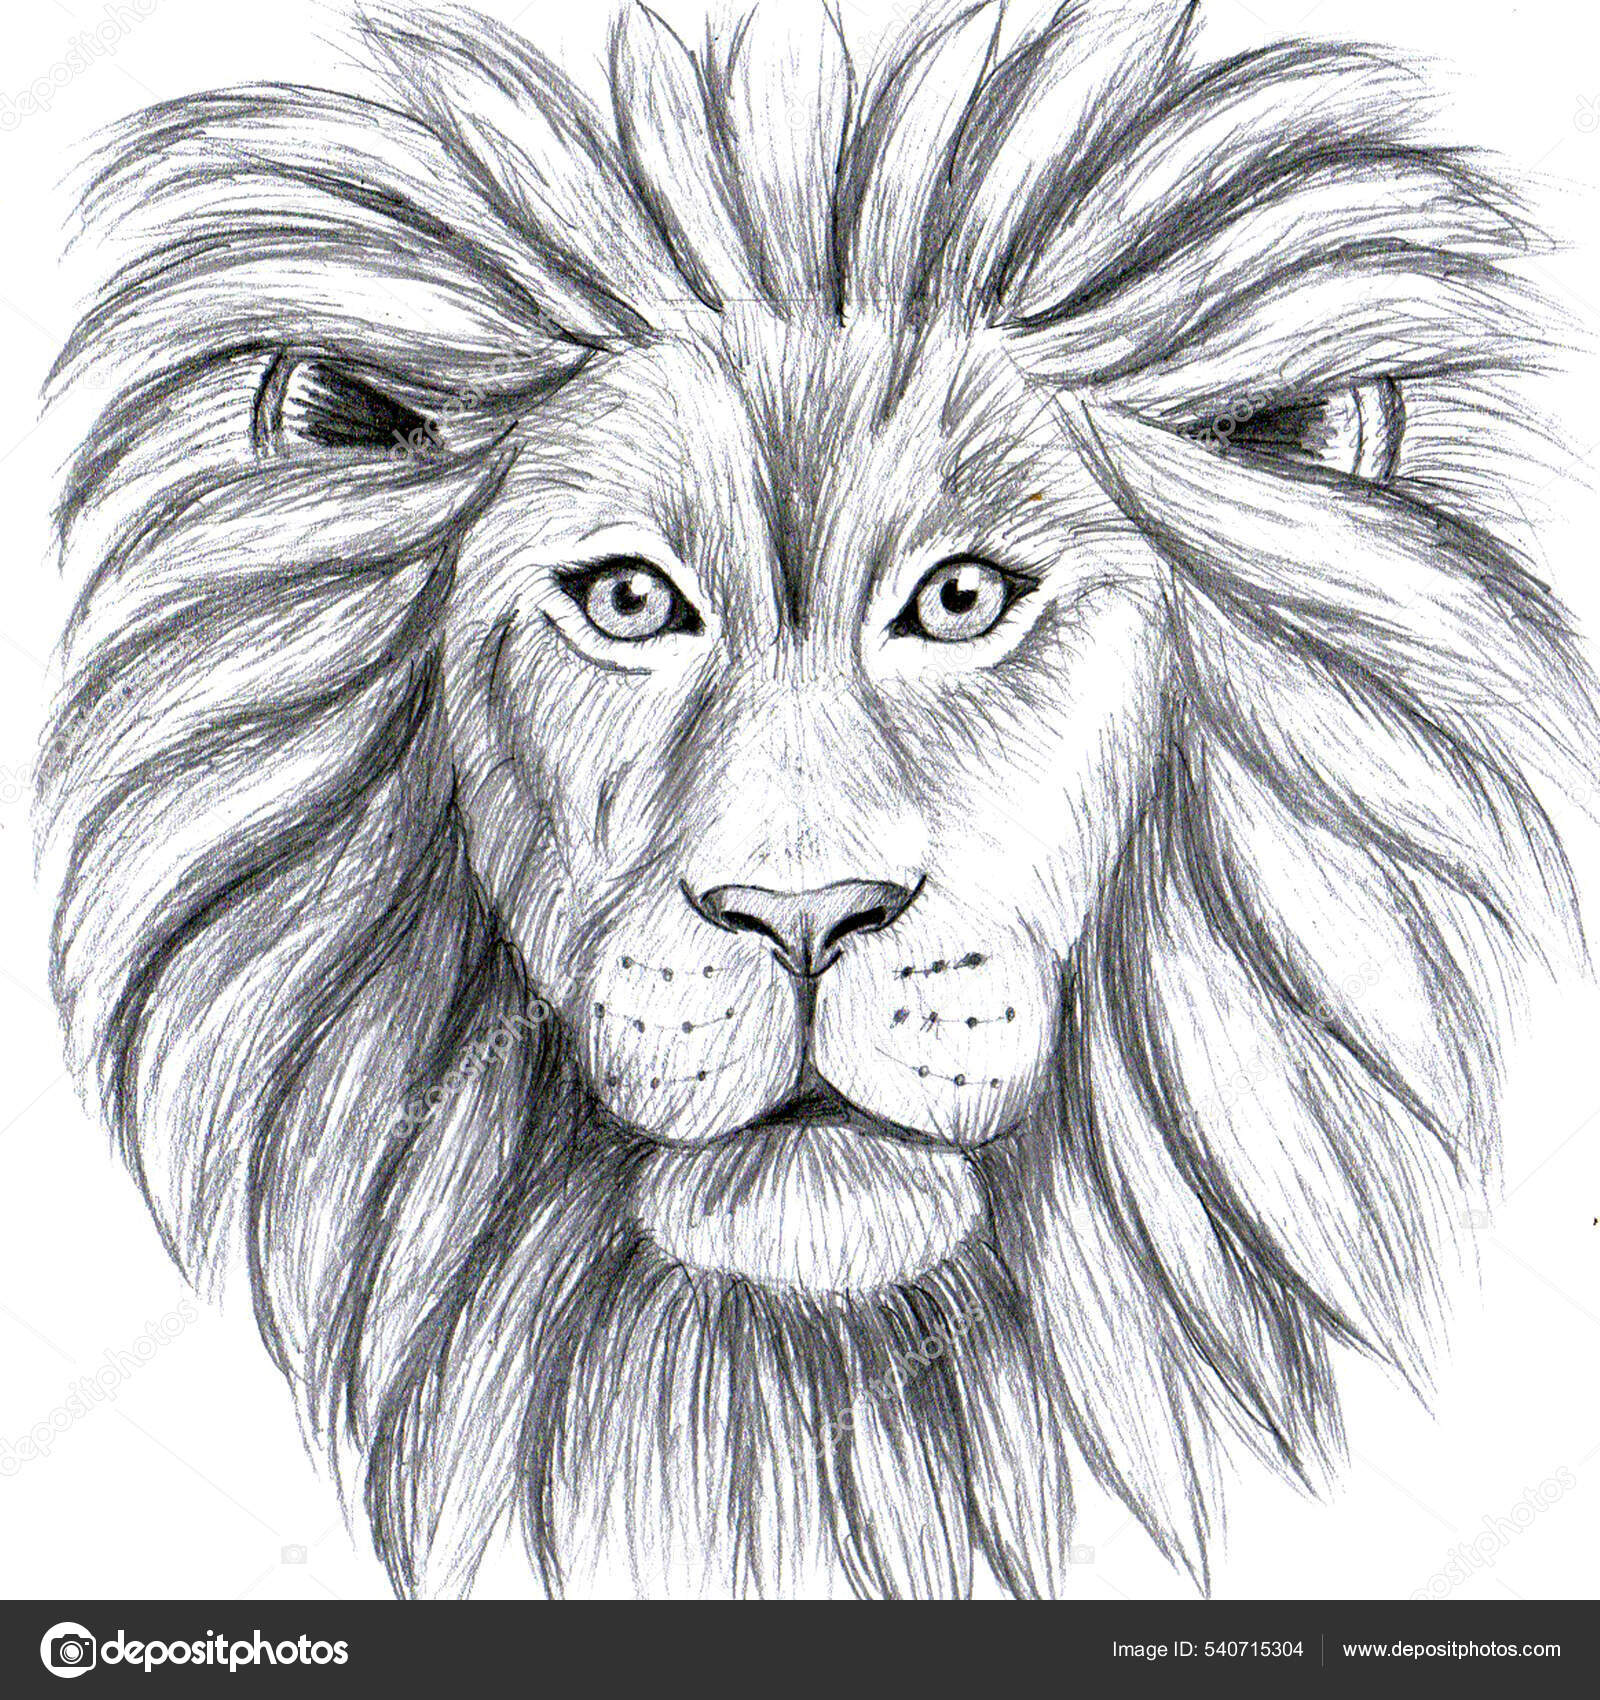 Speed drawing, dessin Lion Crayon blanc sur fond noir 